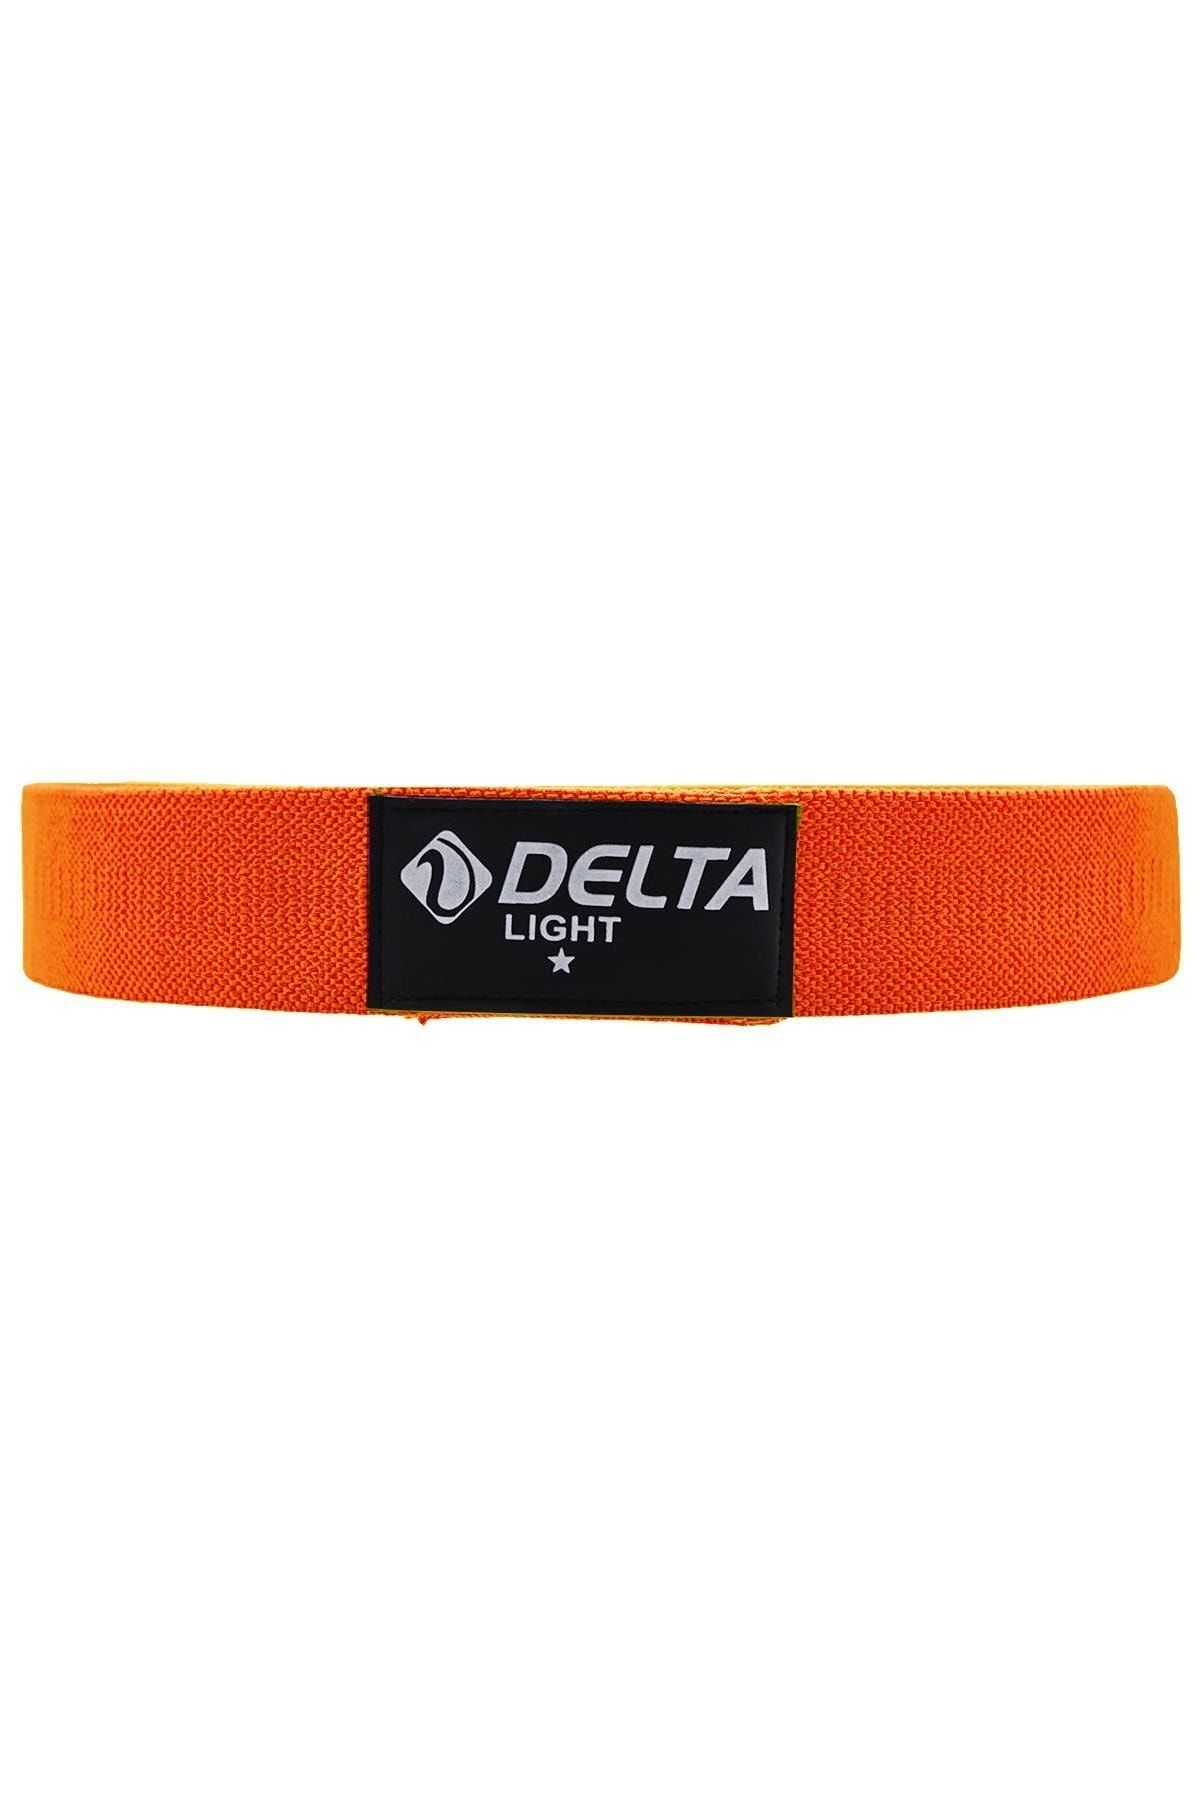 Delta Hafif Sert Squat Bant Pilates Fitness Kalça Egzersizi Direnç Bandı Lastiği (Uç Kısmı Kapalı)